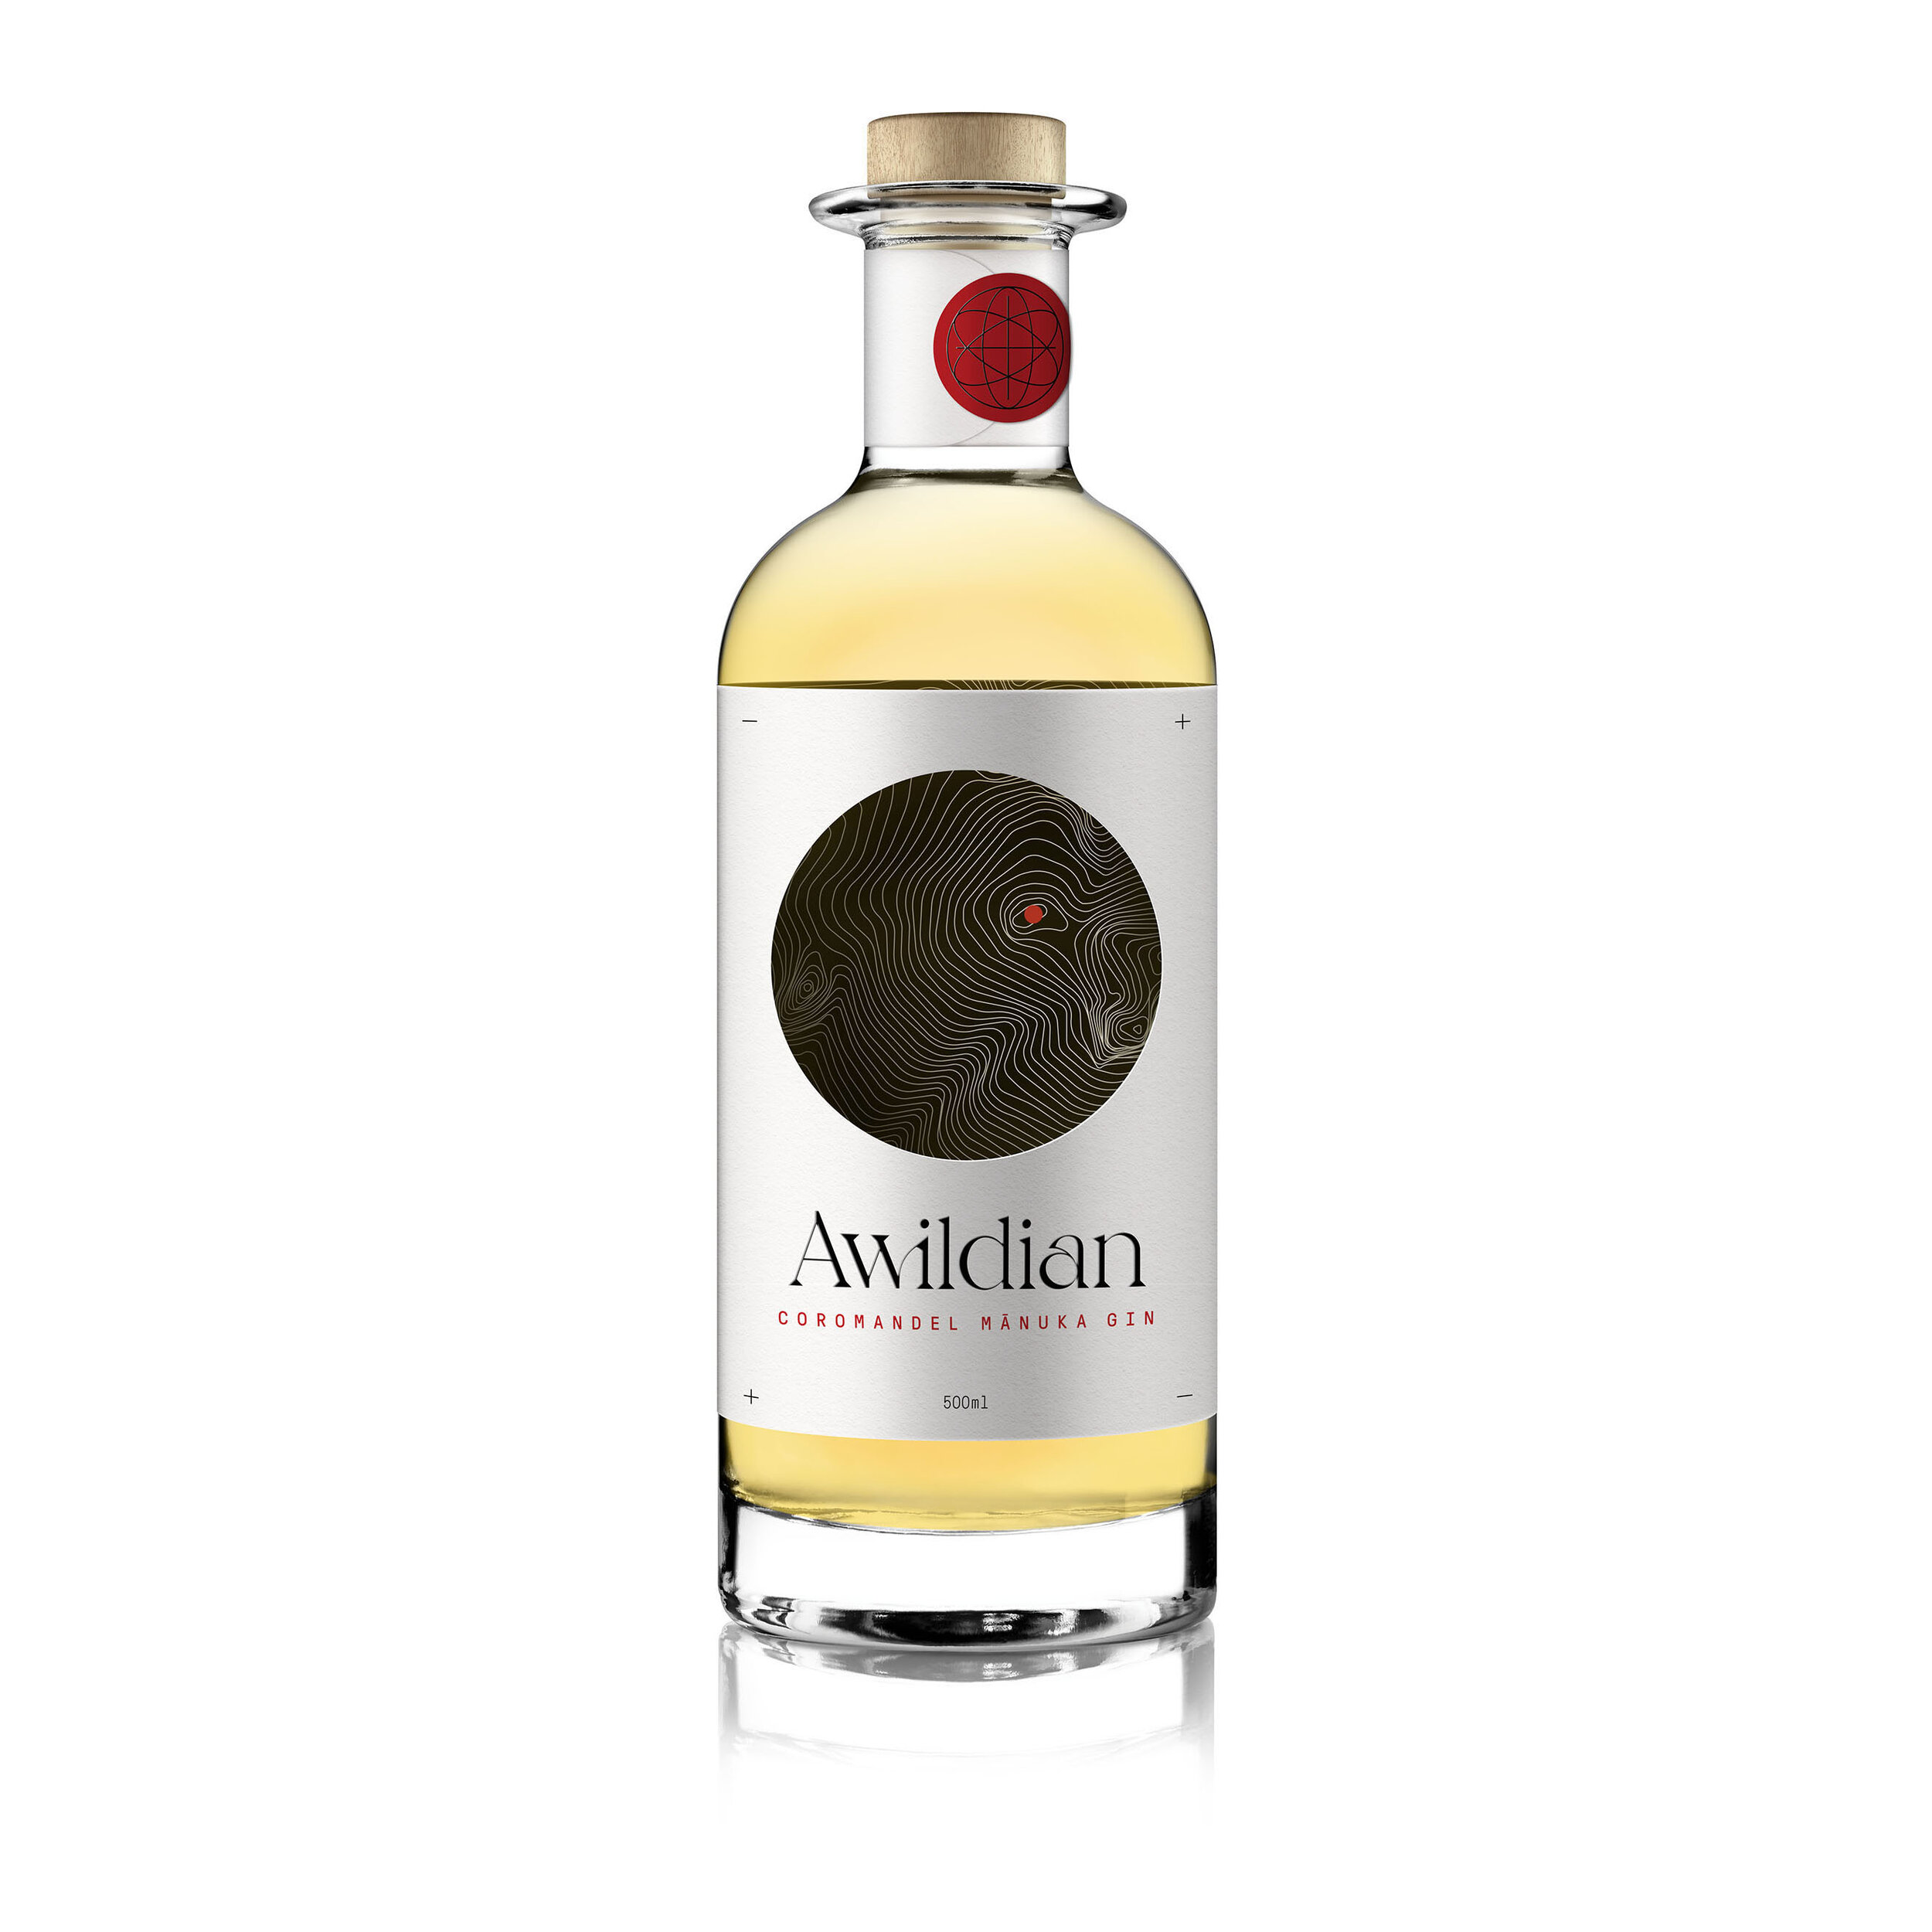 Awildian Coromandel Manuka Gin – New Zealand